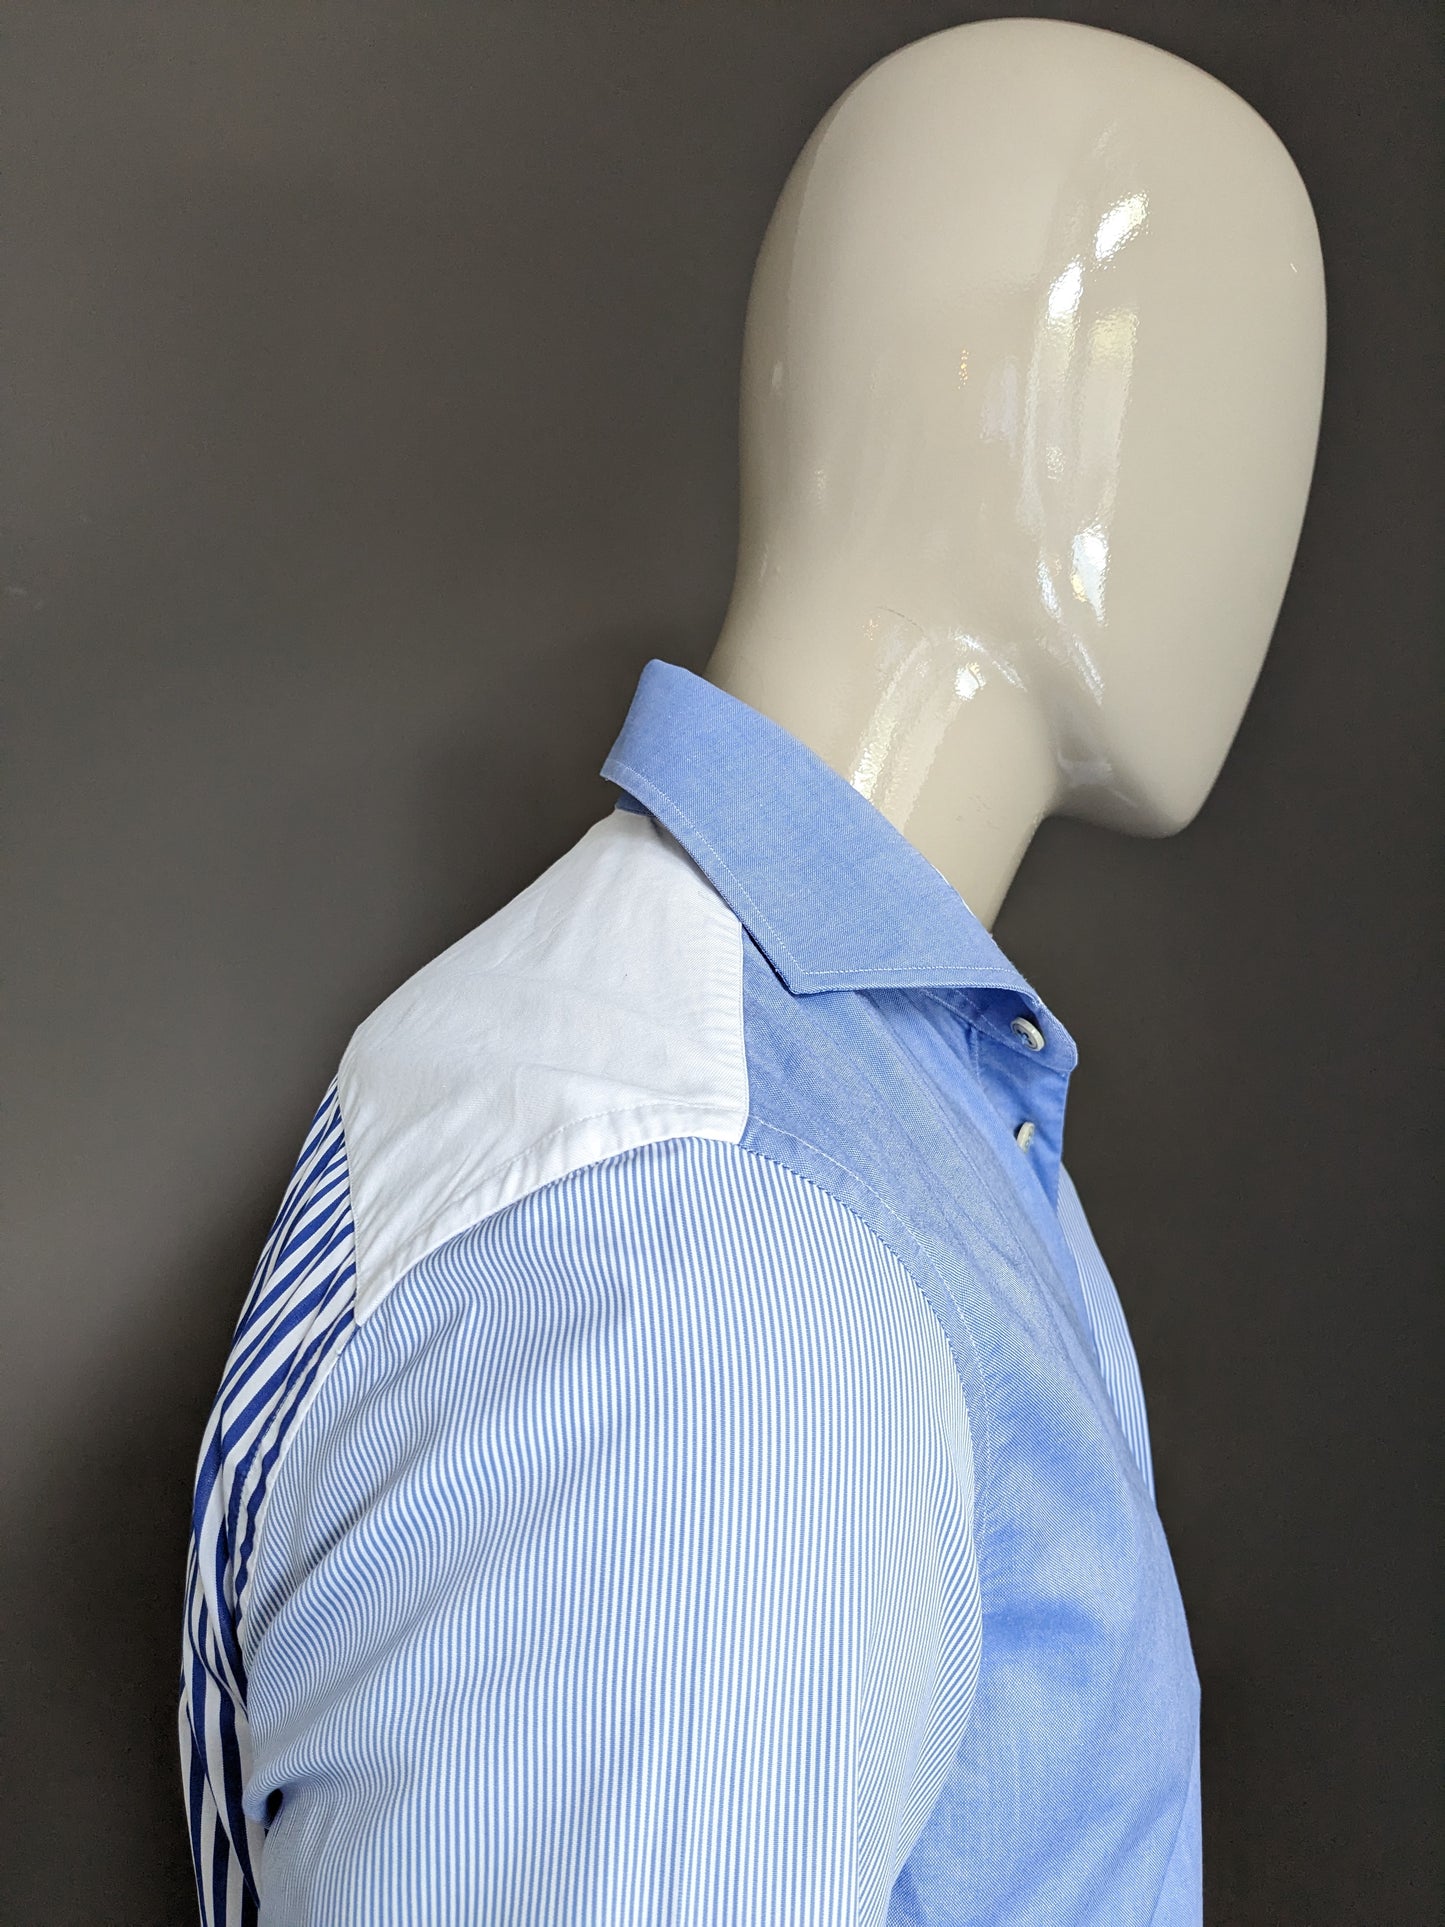 Profuomo Sky Blue overhemd. Blauw Wit gekleurd / motief. Maat 40 / M Slim Fit.